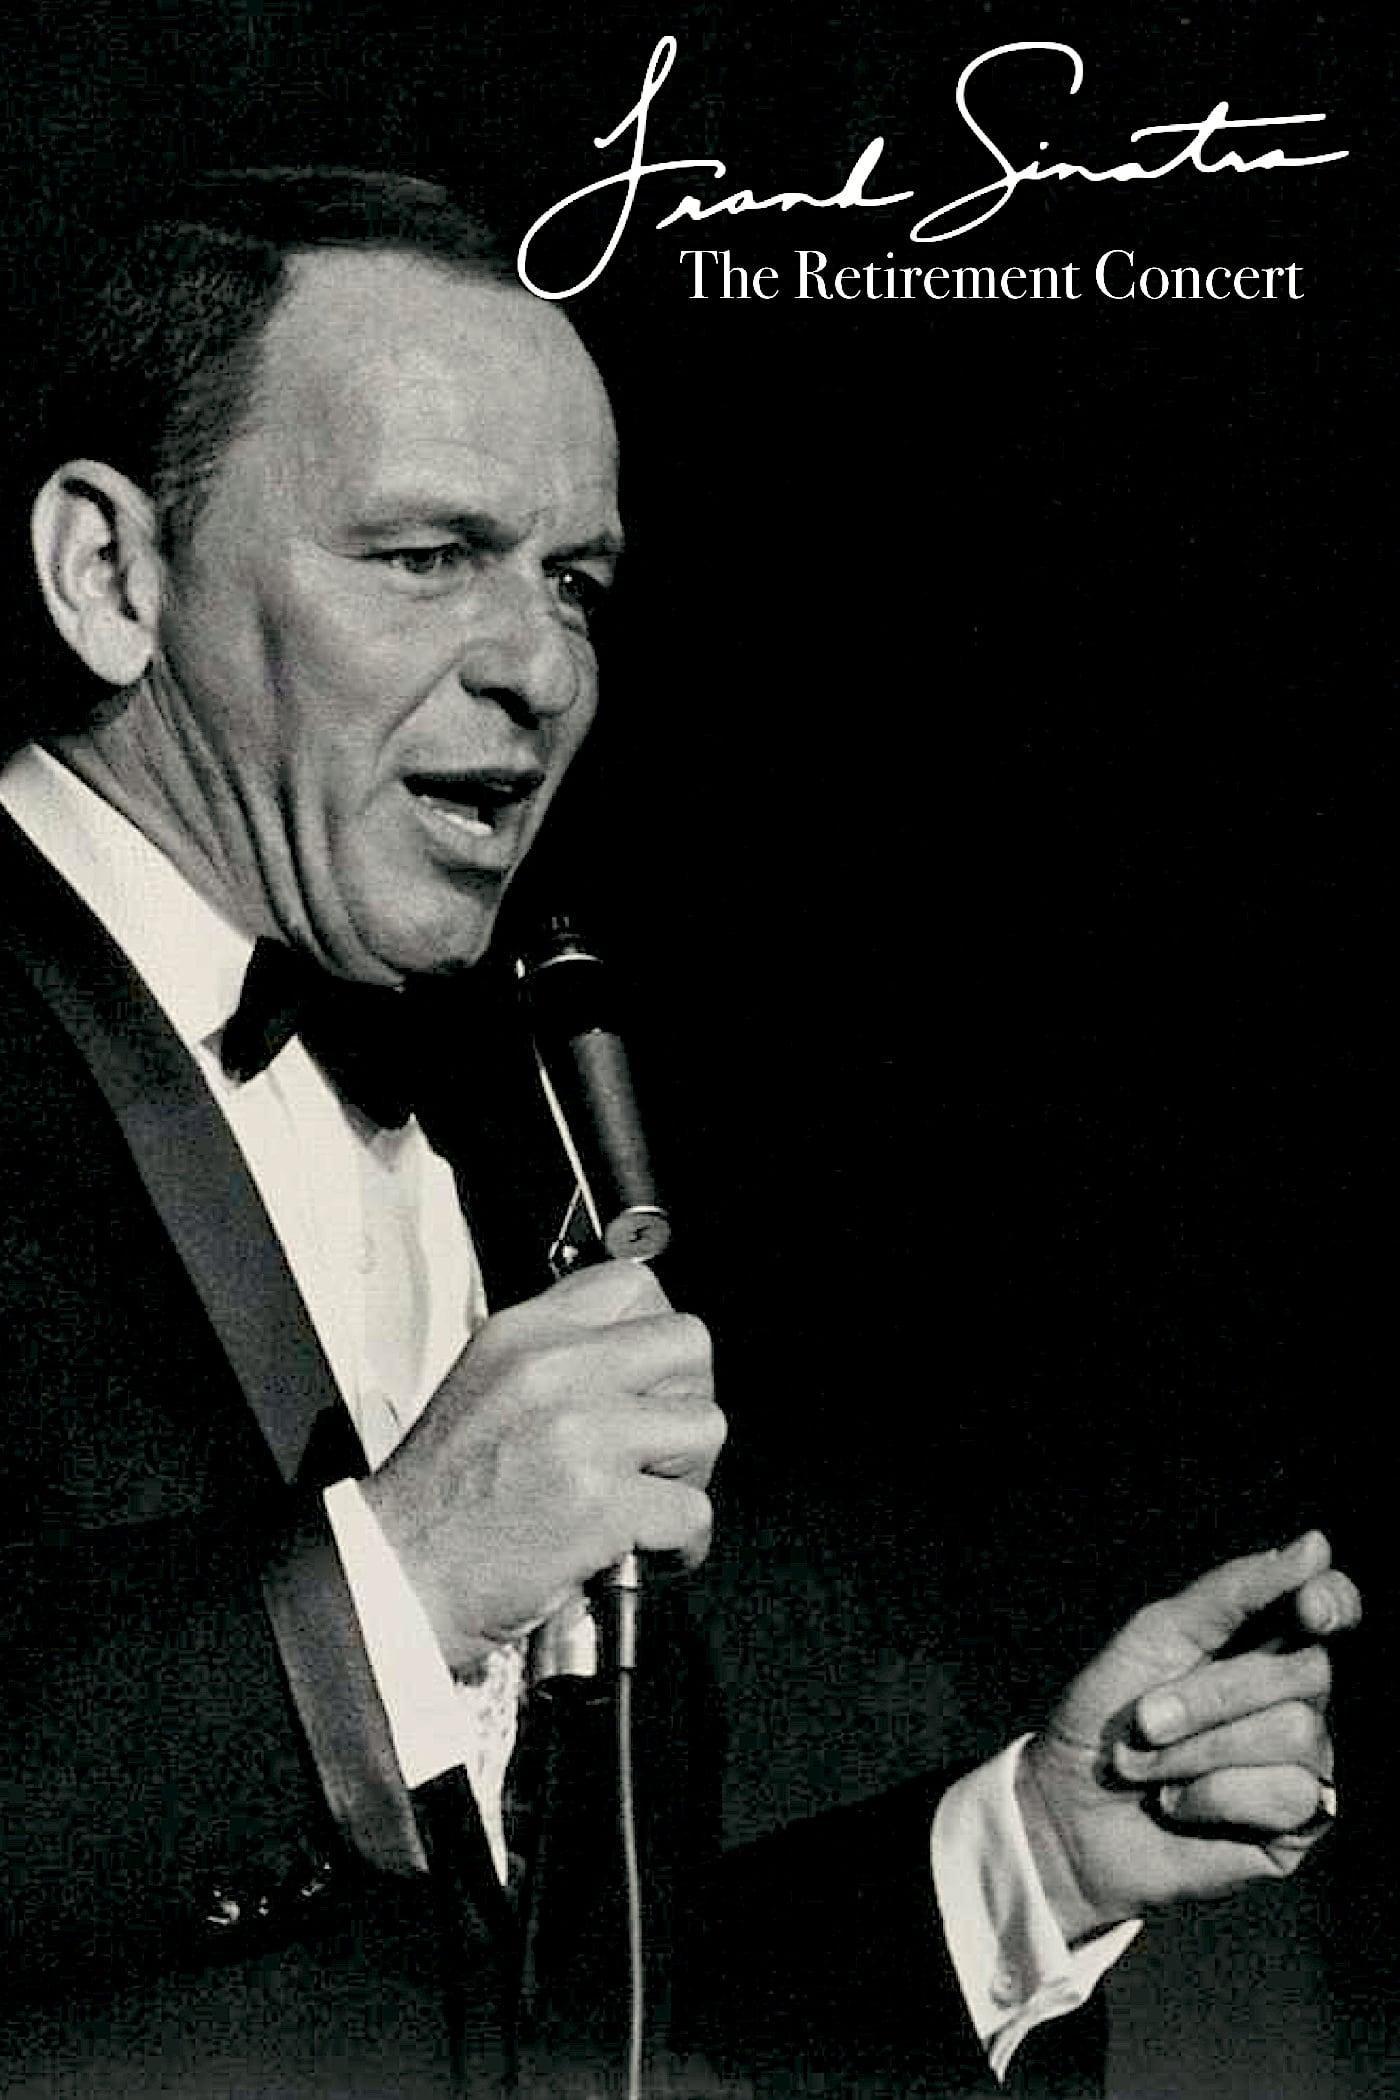 Frank Sinatra: The Retirement Concert poster